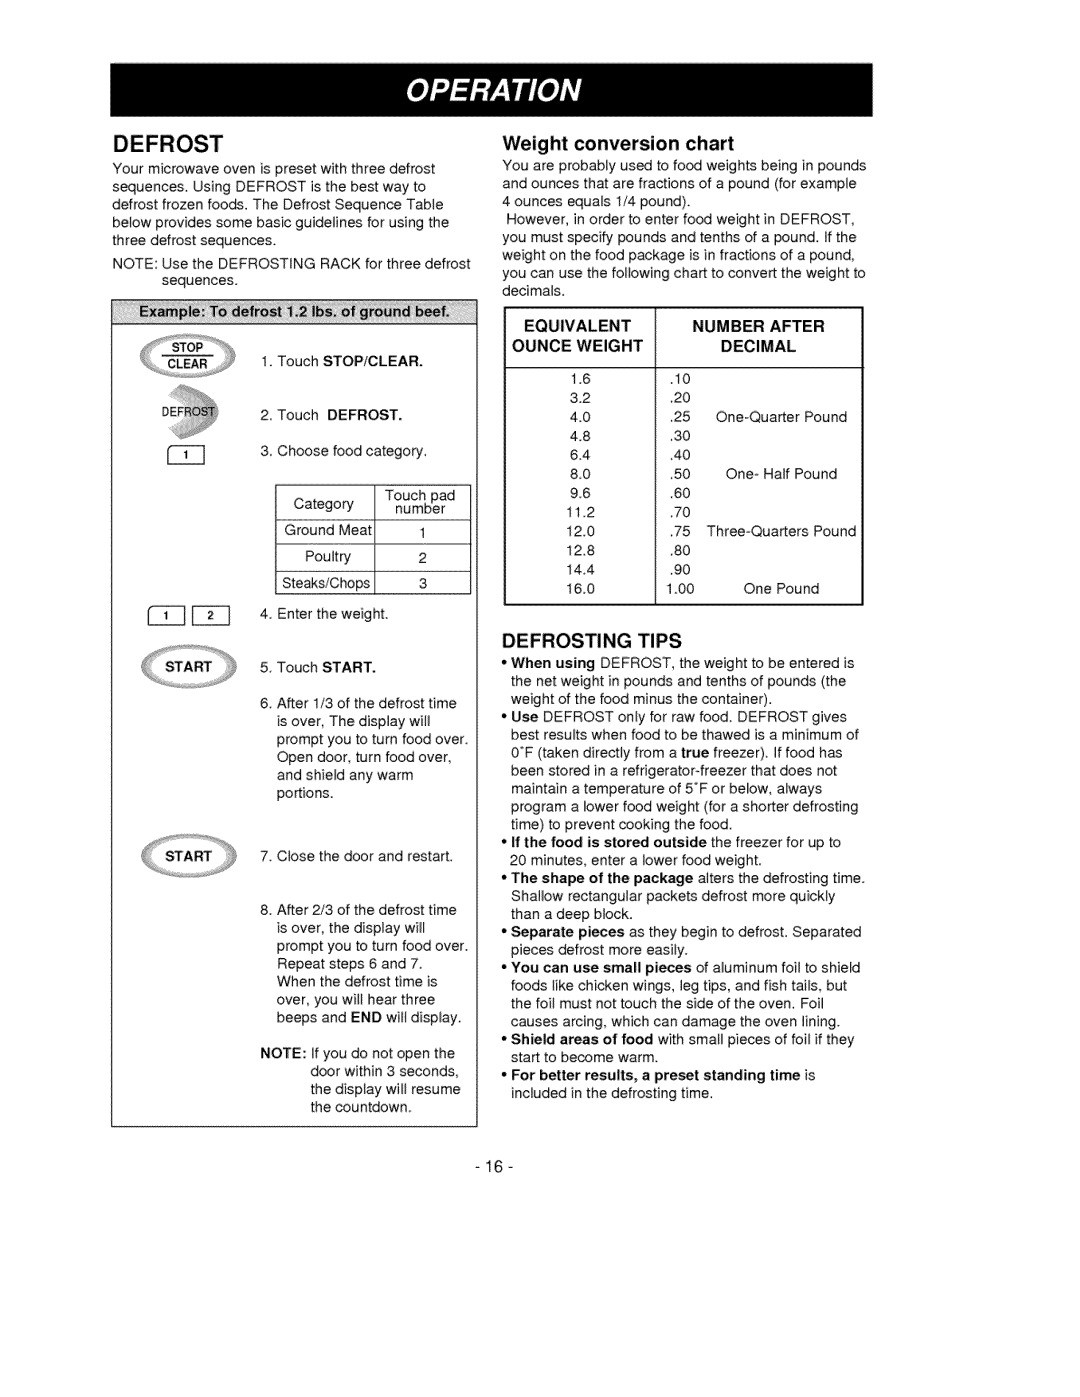 Goldstar MV-1525W, MV-1525B owner manual Weight conversion chart, 9.6.60, 12.8,80 